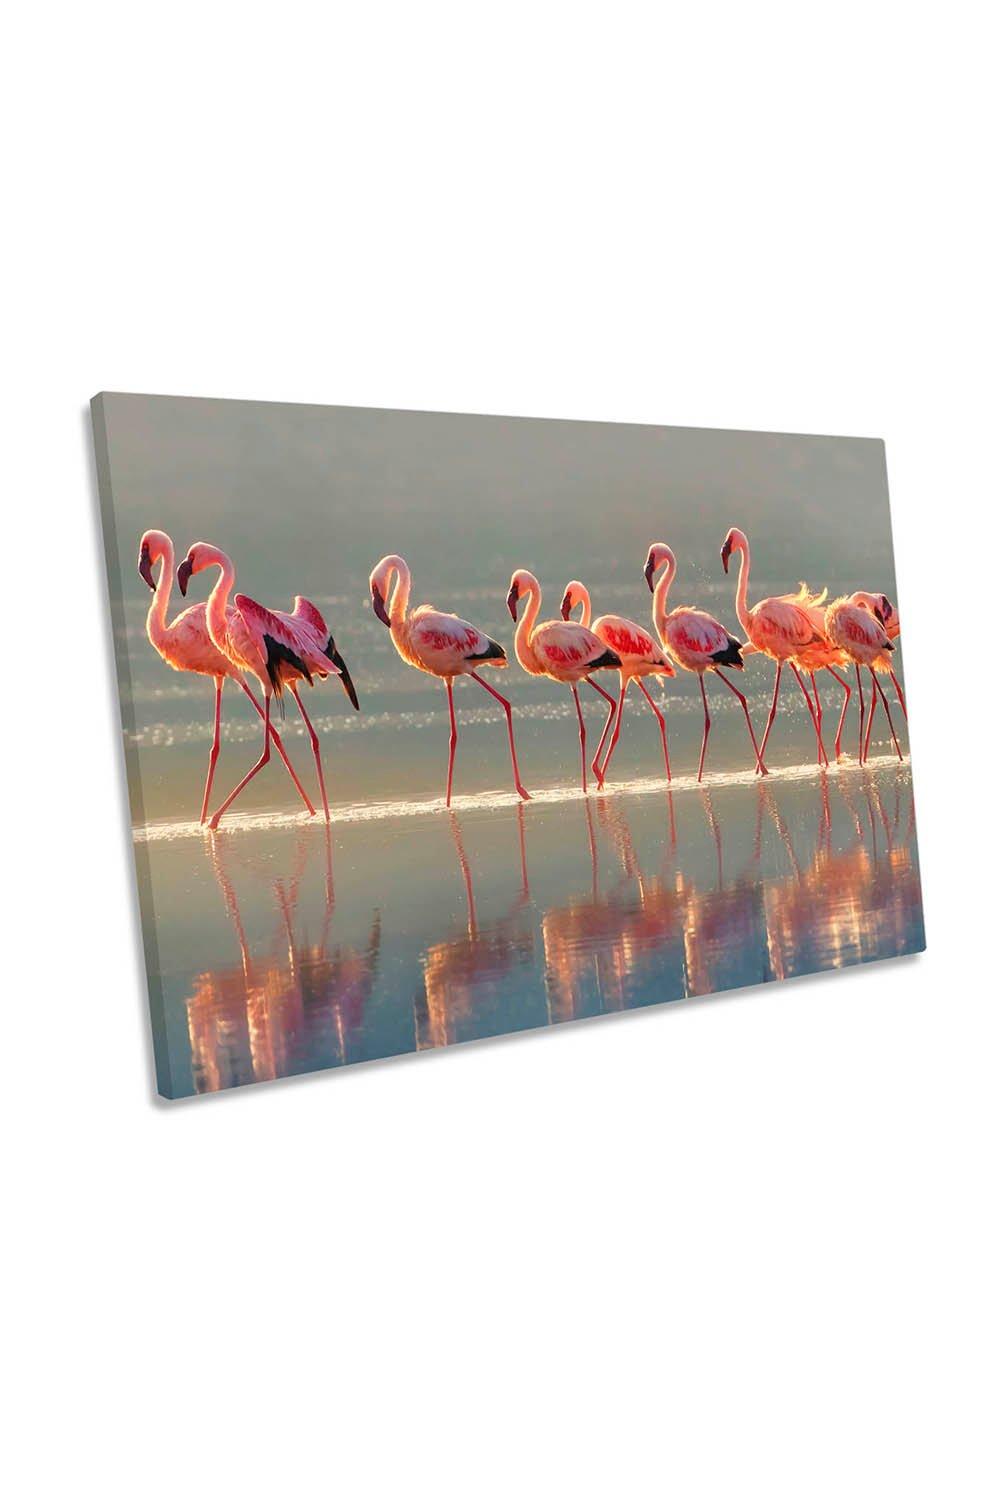 Pink Flamingo Birds Wildlife Canvas Wall Art Picture Print